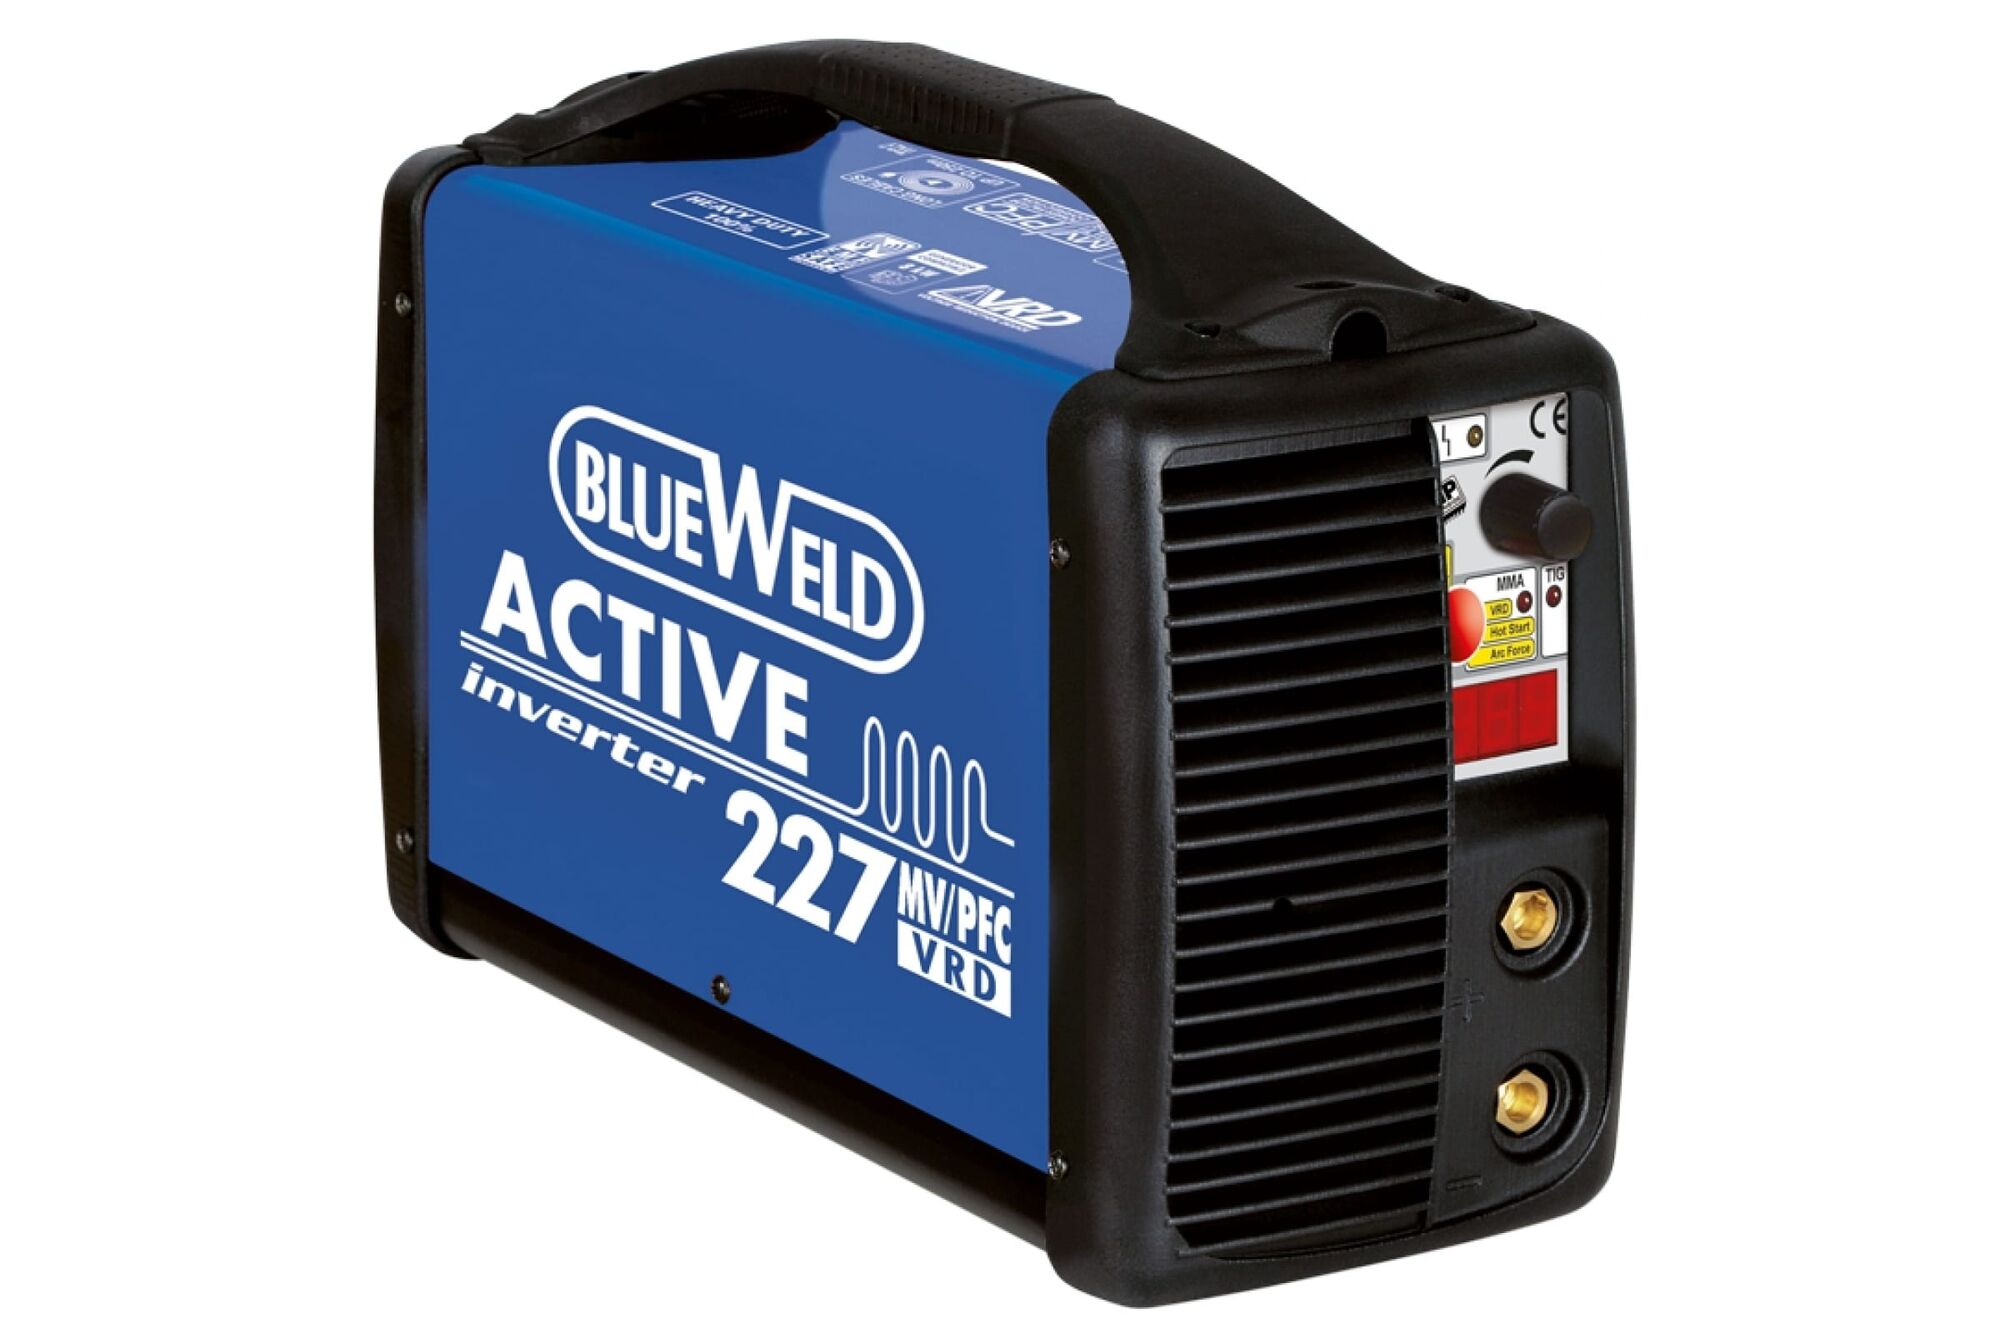 Инвертор BlueWeld ACTIVE Tig 227 MV/PFC DC-LIFT VRD 852120